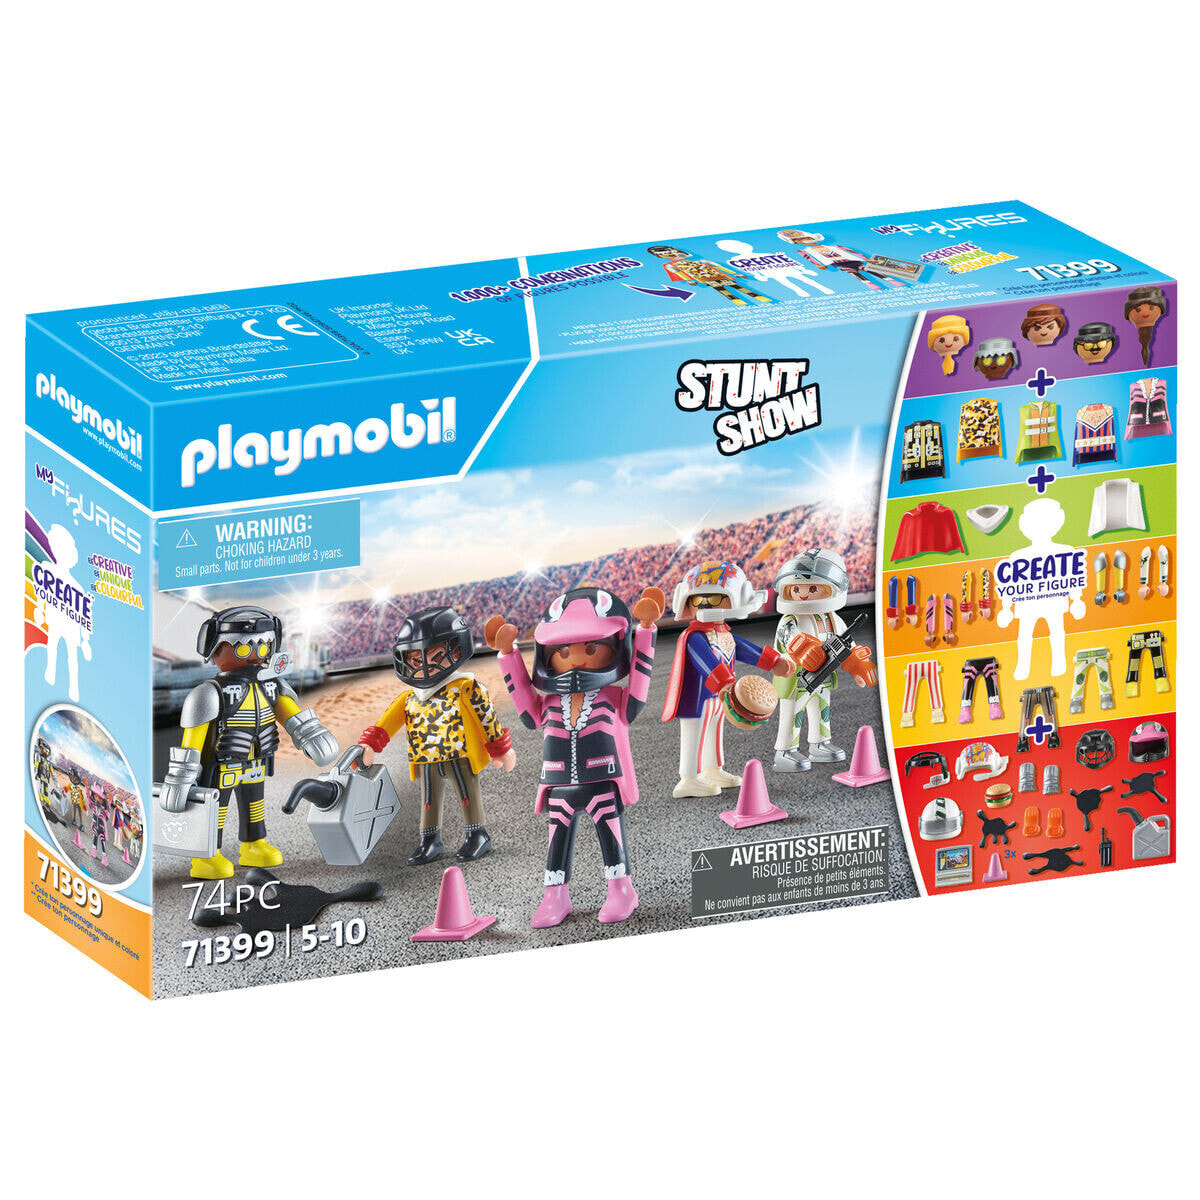 Playset Playmobil 71399 Stunt Show 74 Pieces